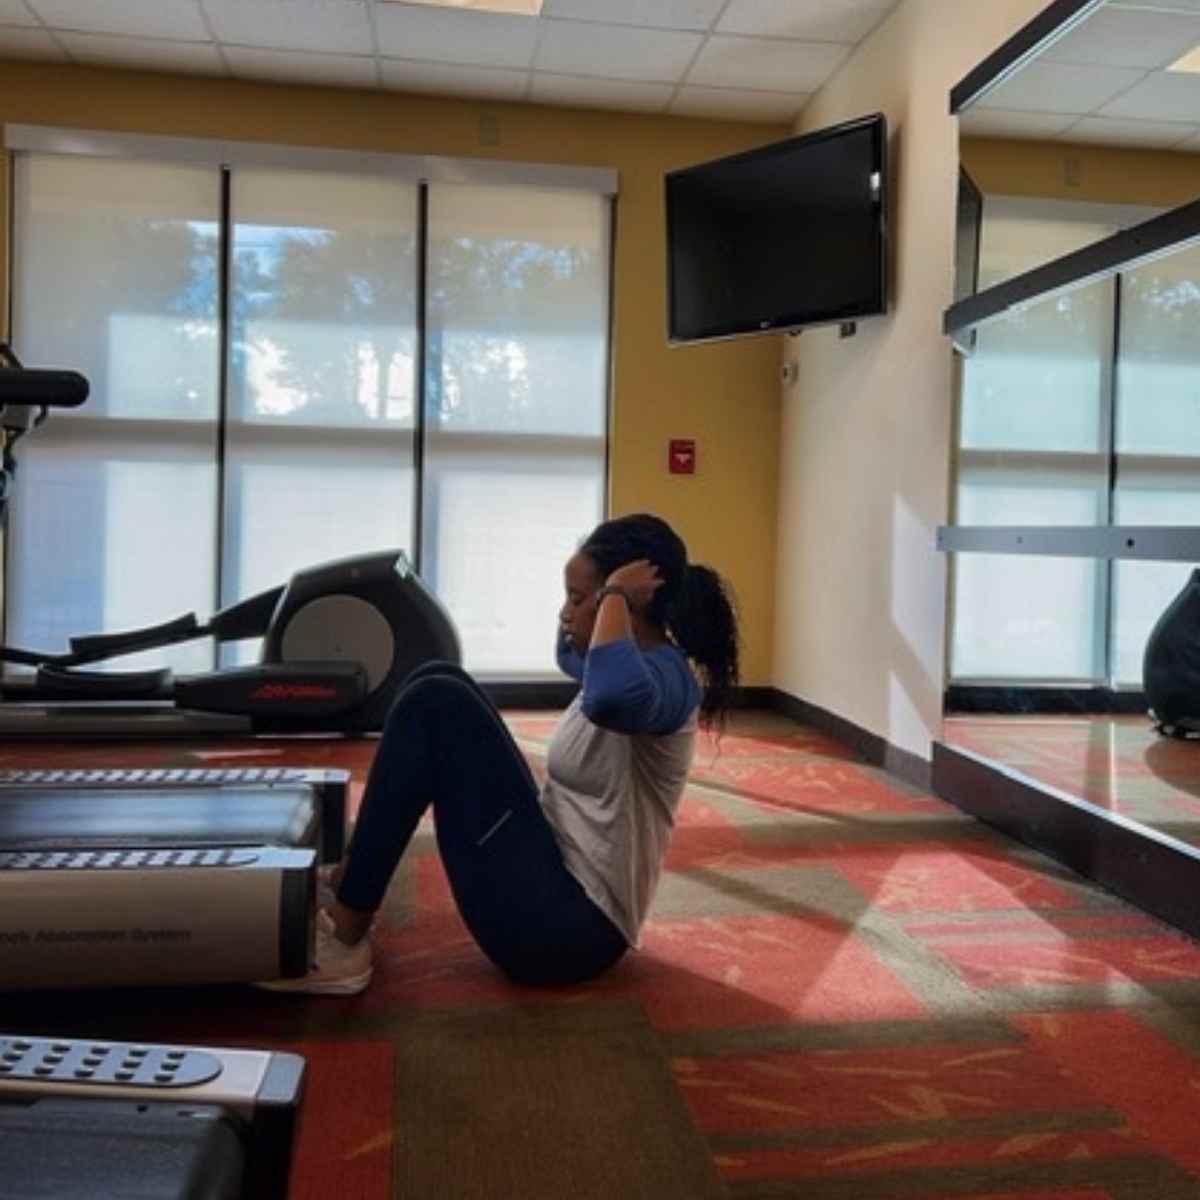 Hotel CrossFit workout ideas